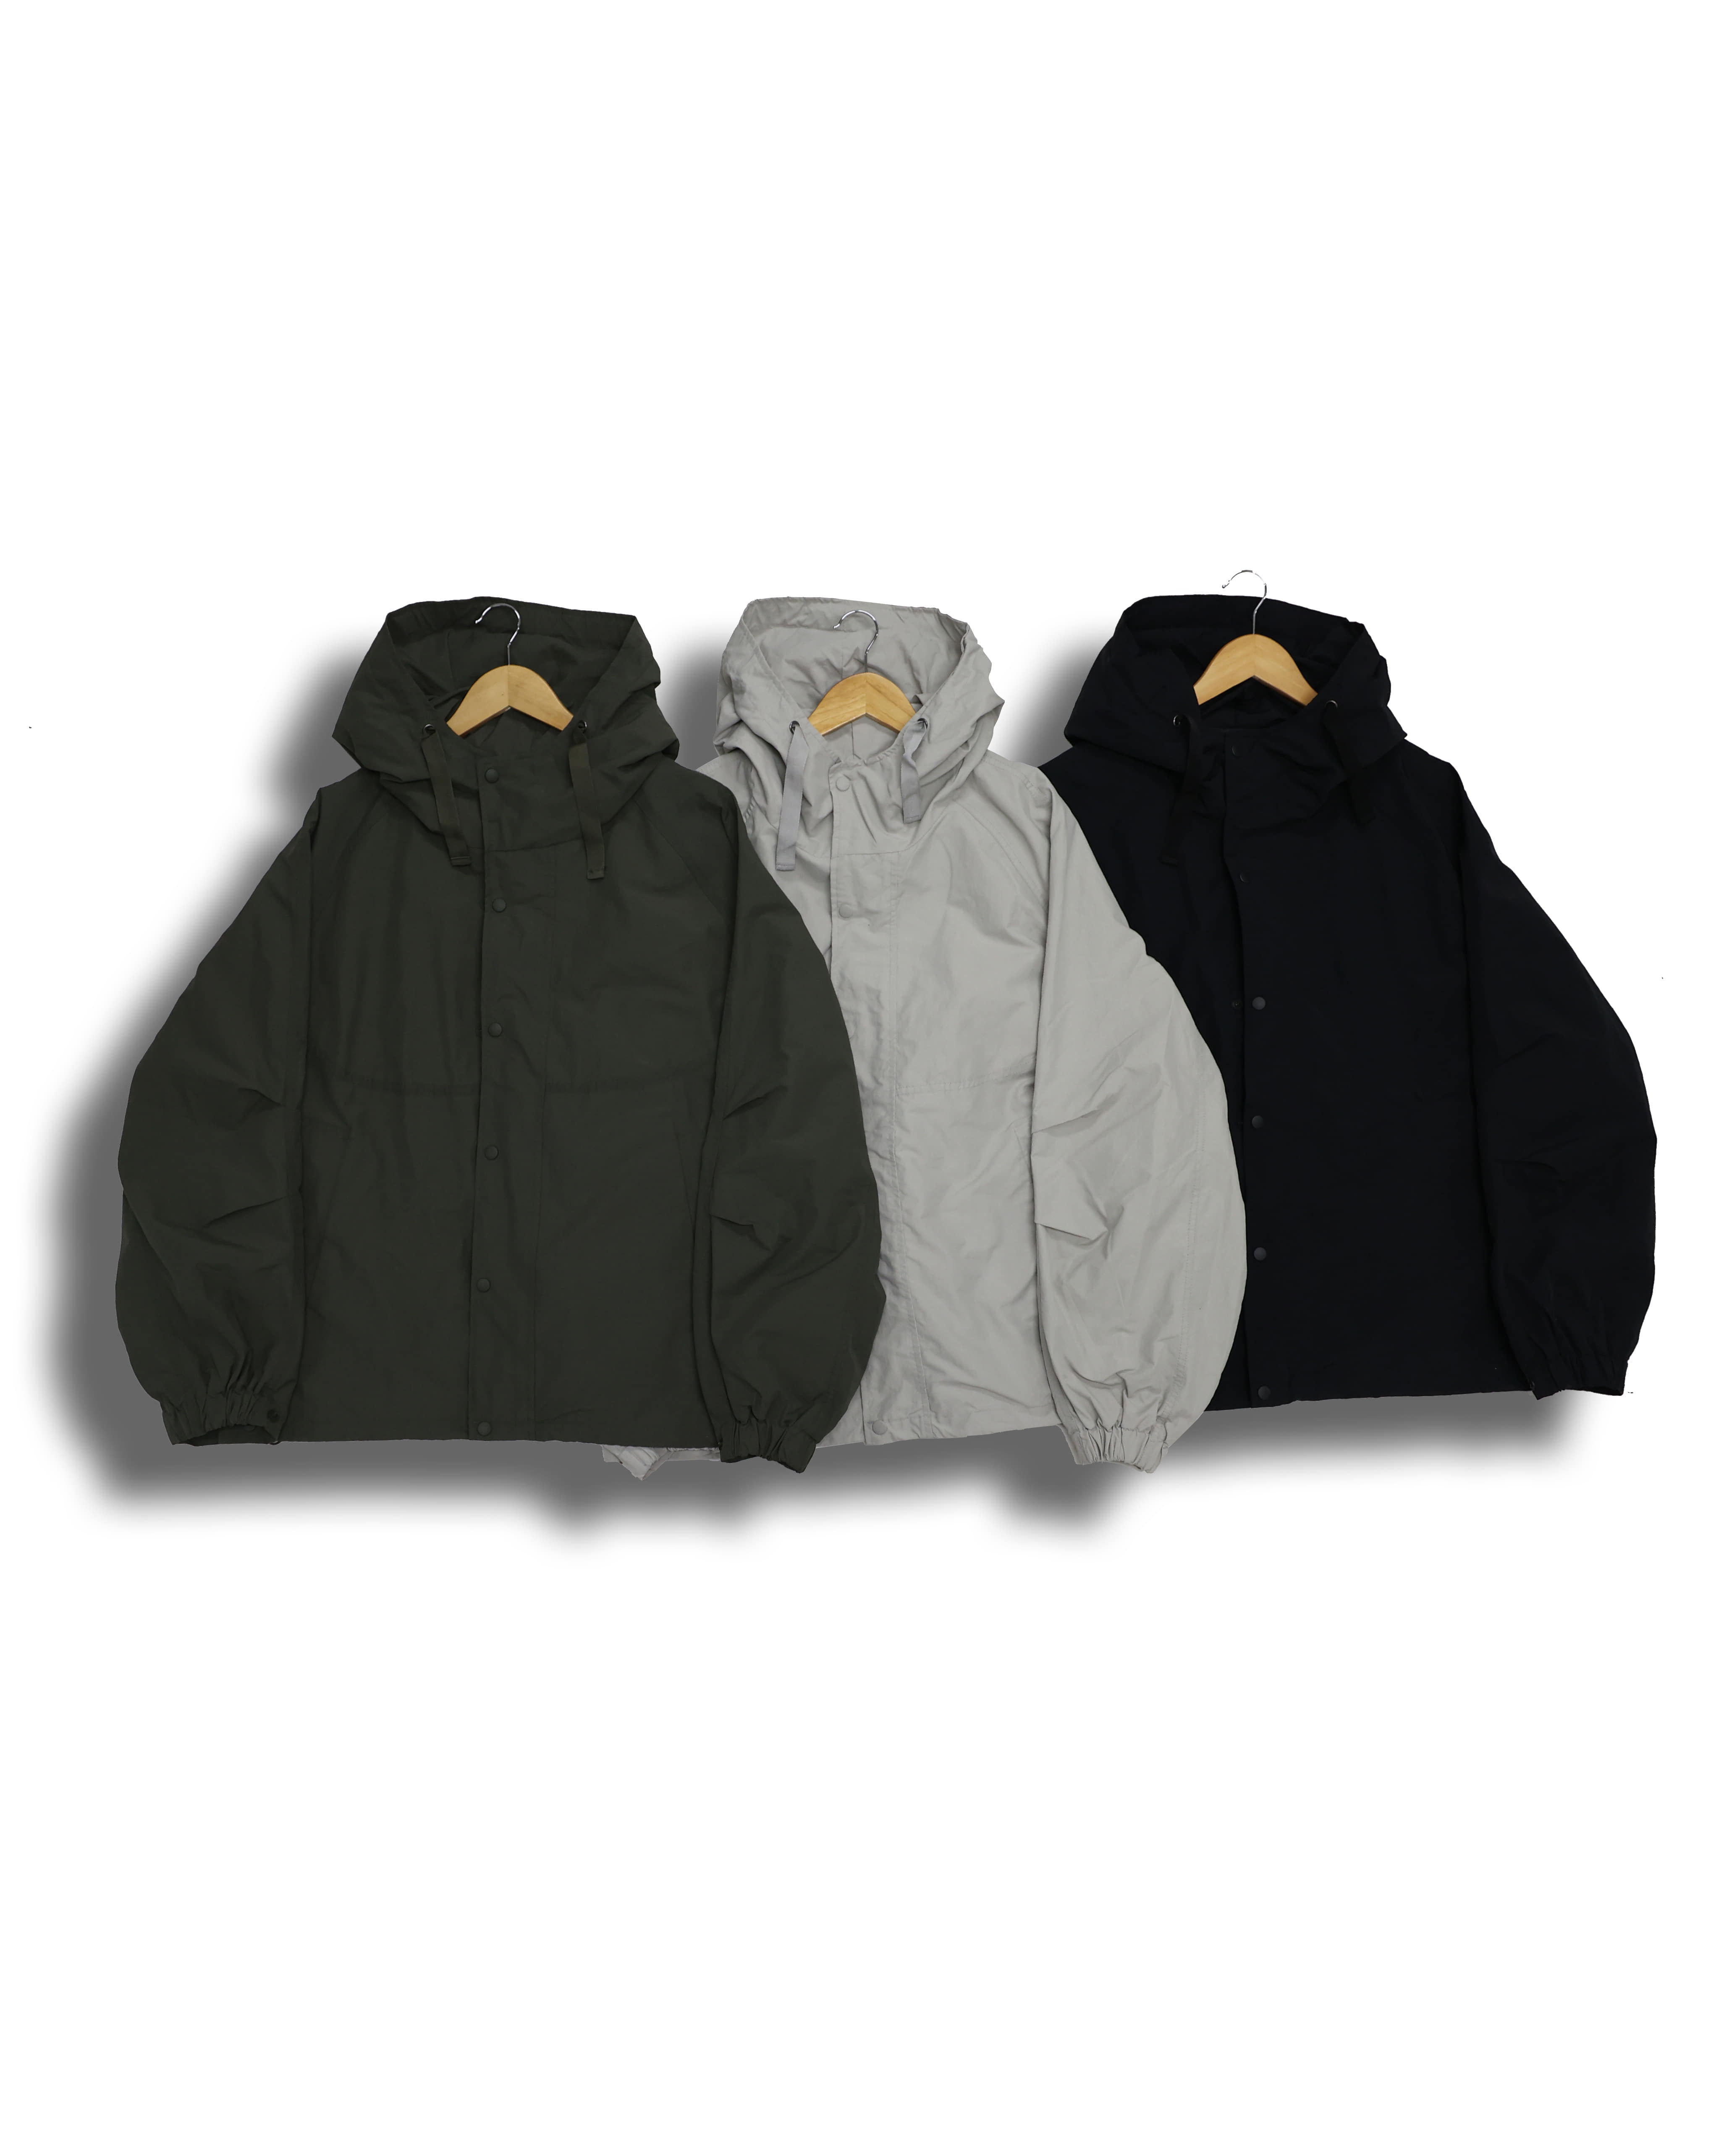 FARM Military Hoodied Wind Jacket (Black/Khaki/Gray)